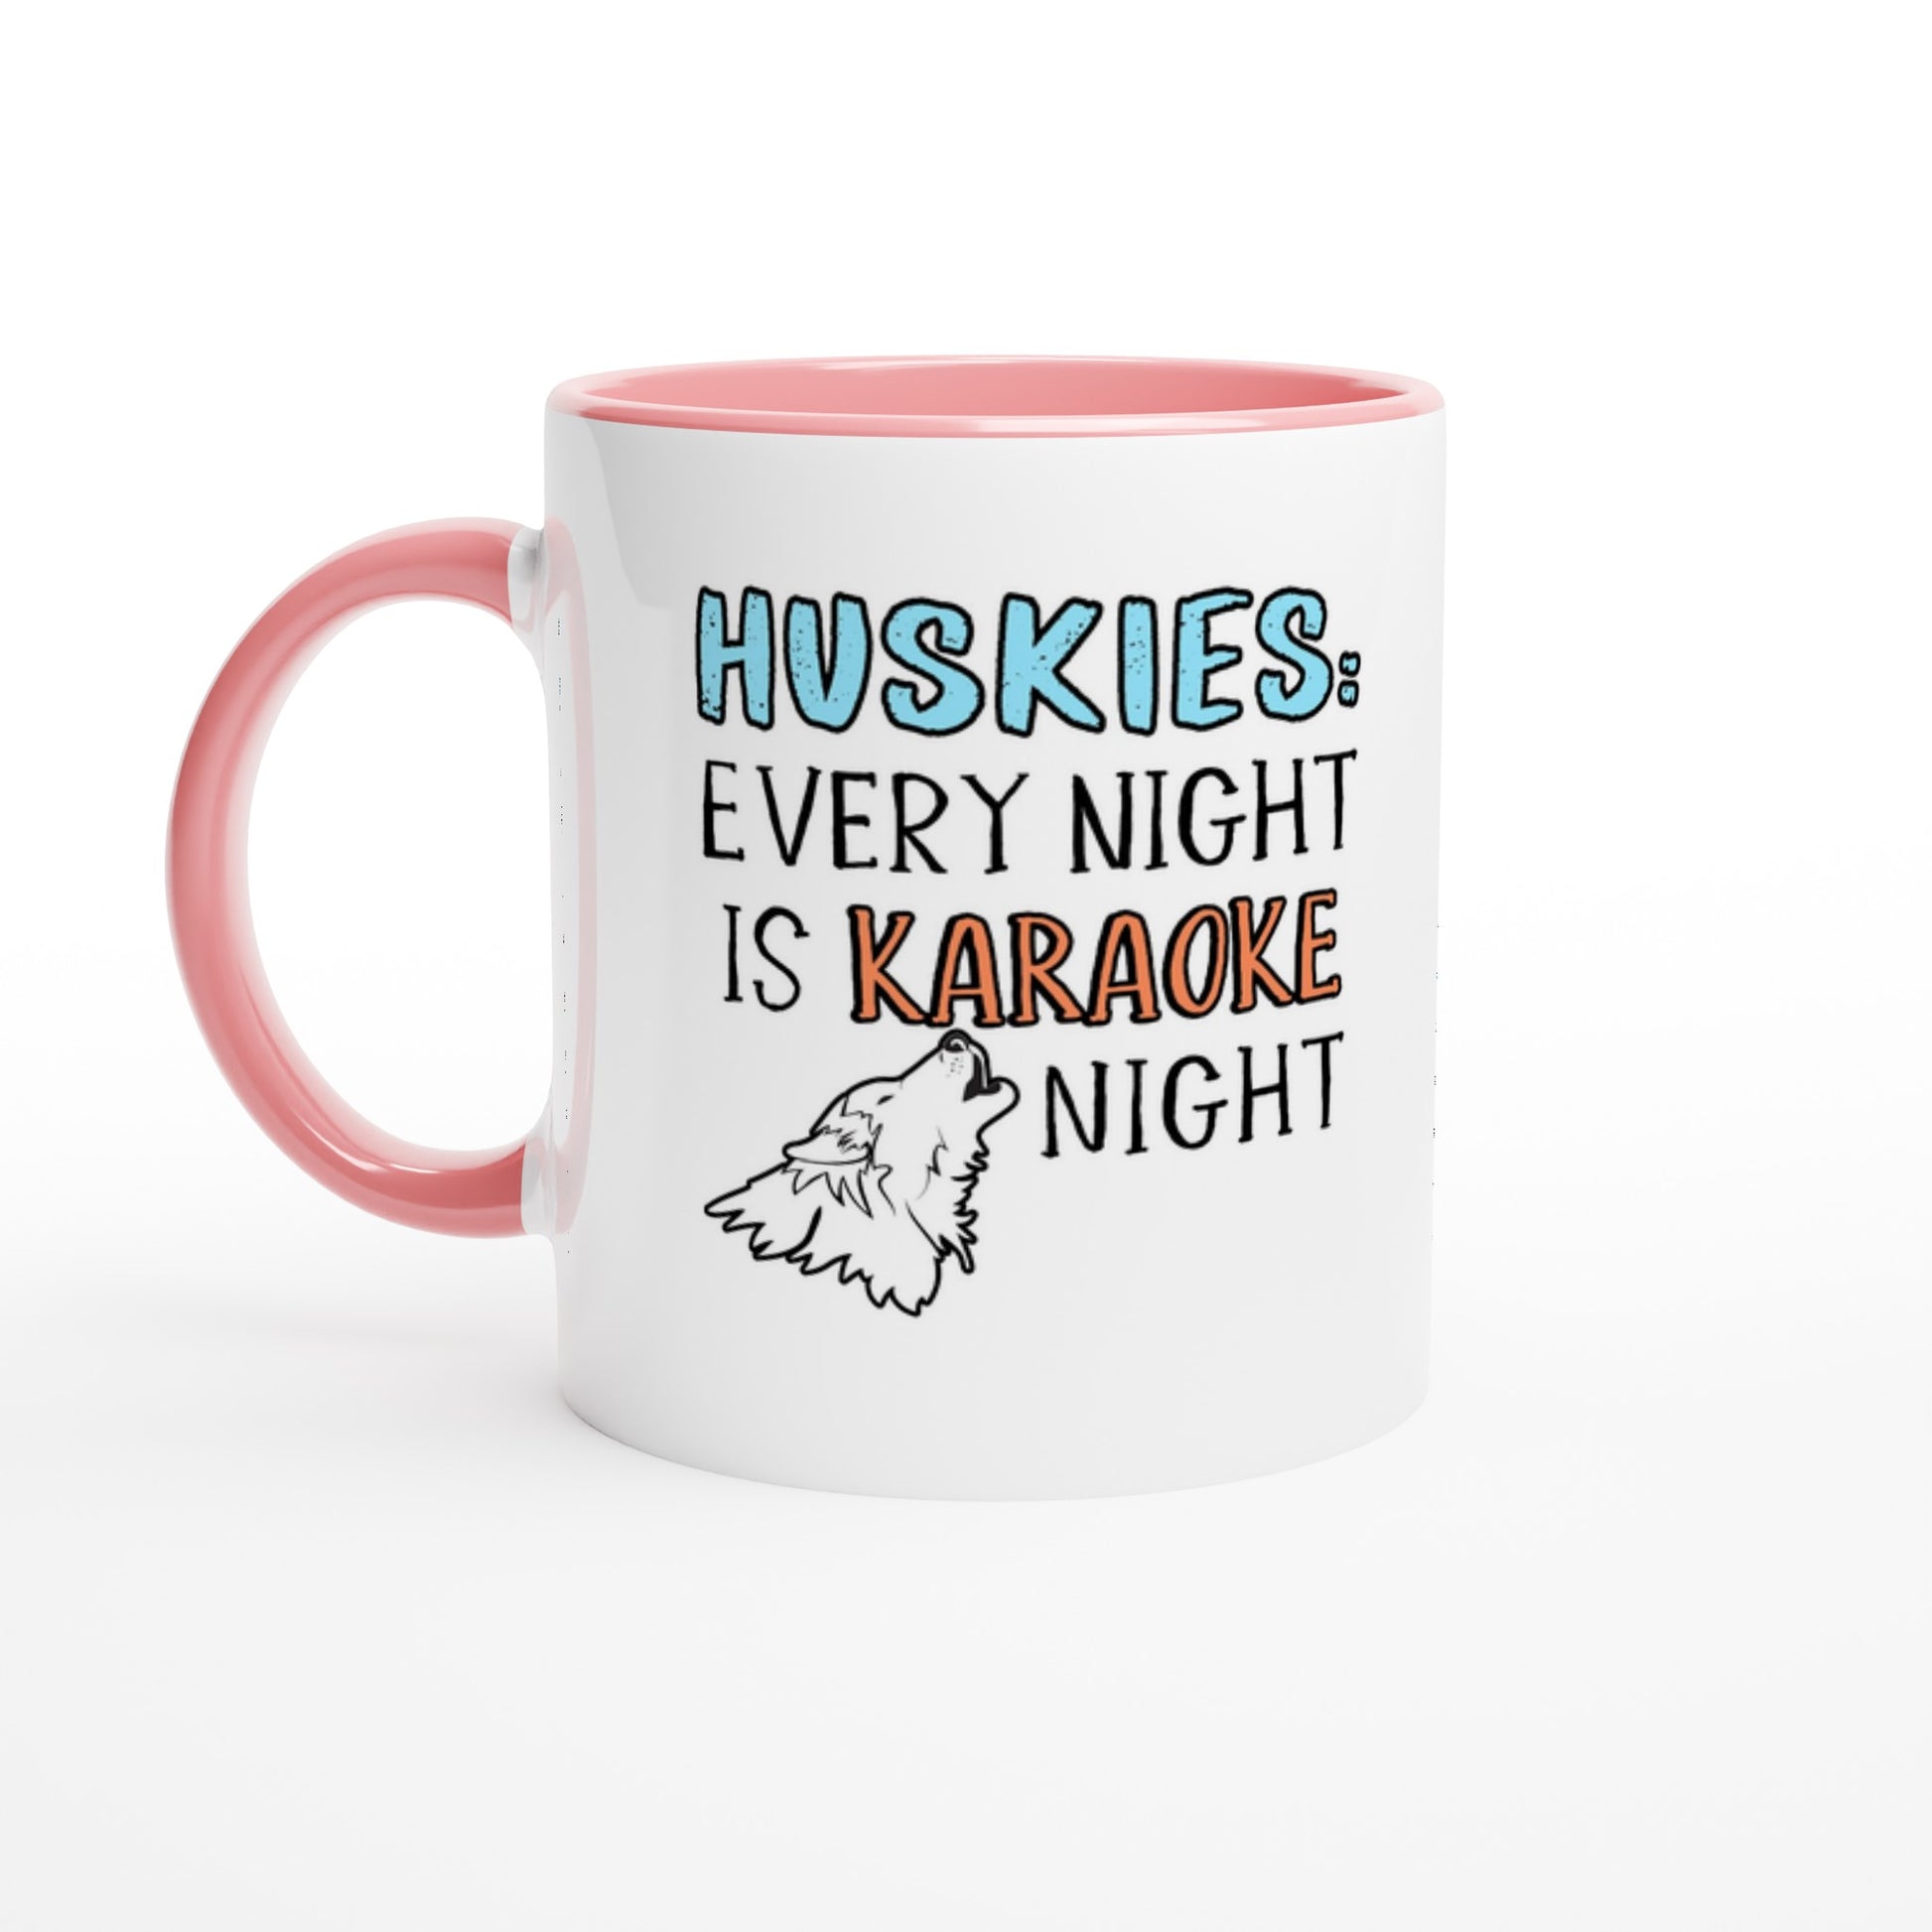 White ceramic coffee mug with the design: "HUSKIES: Every Night Is Karaoke Night.". The handle and interior are pink